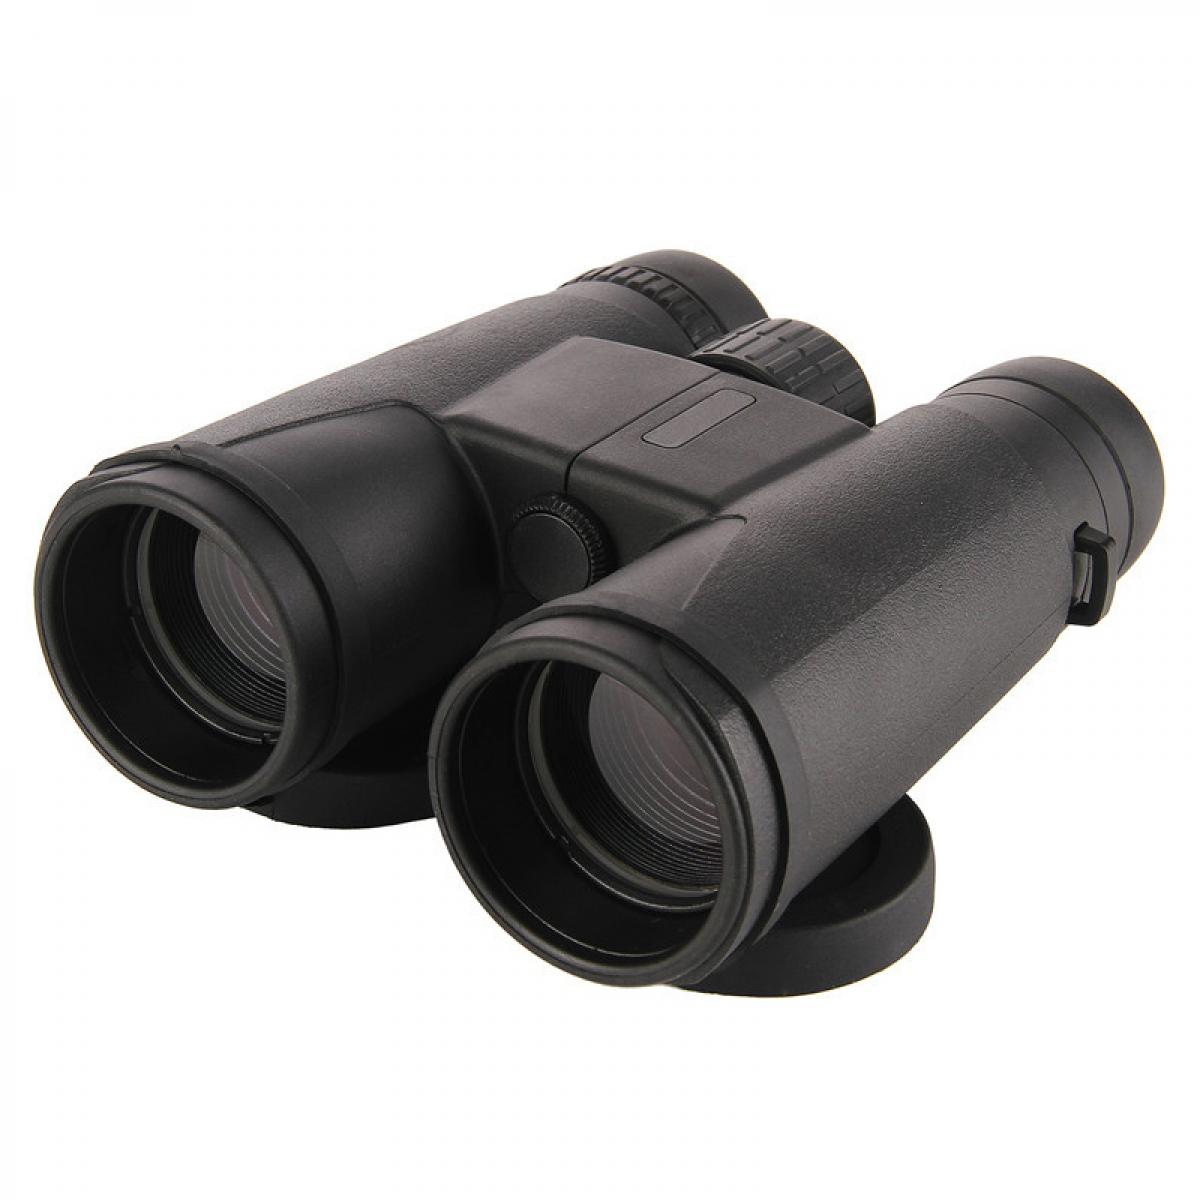 Binoculars10x42 Binoculars for AdultsKalawen HD Binoculars with Low Light Nig... 